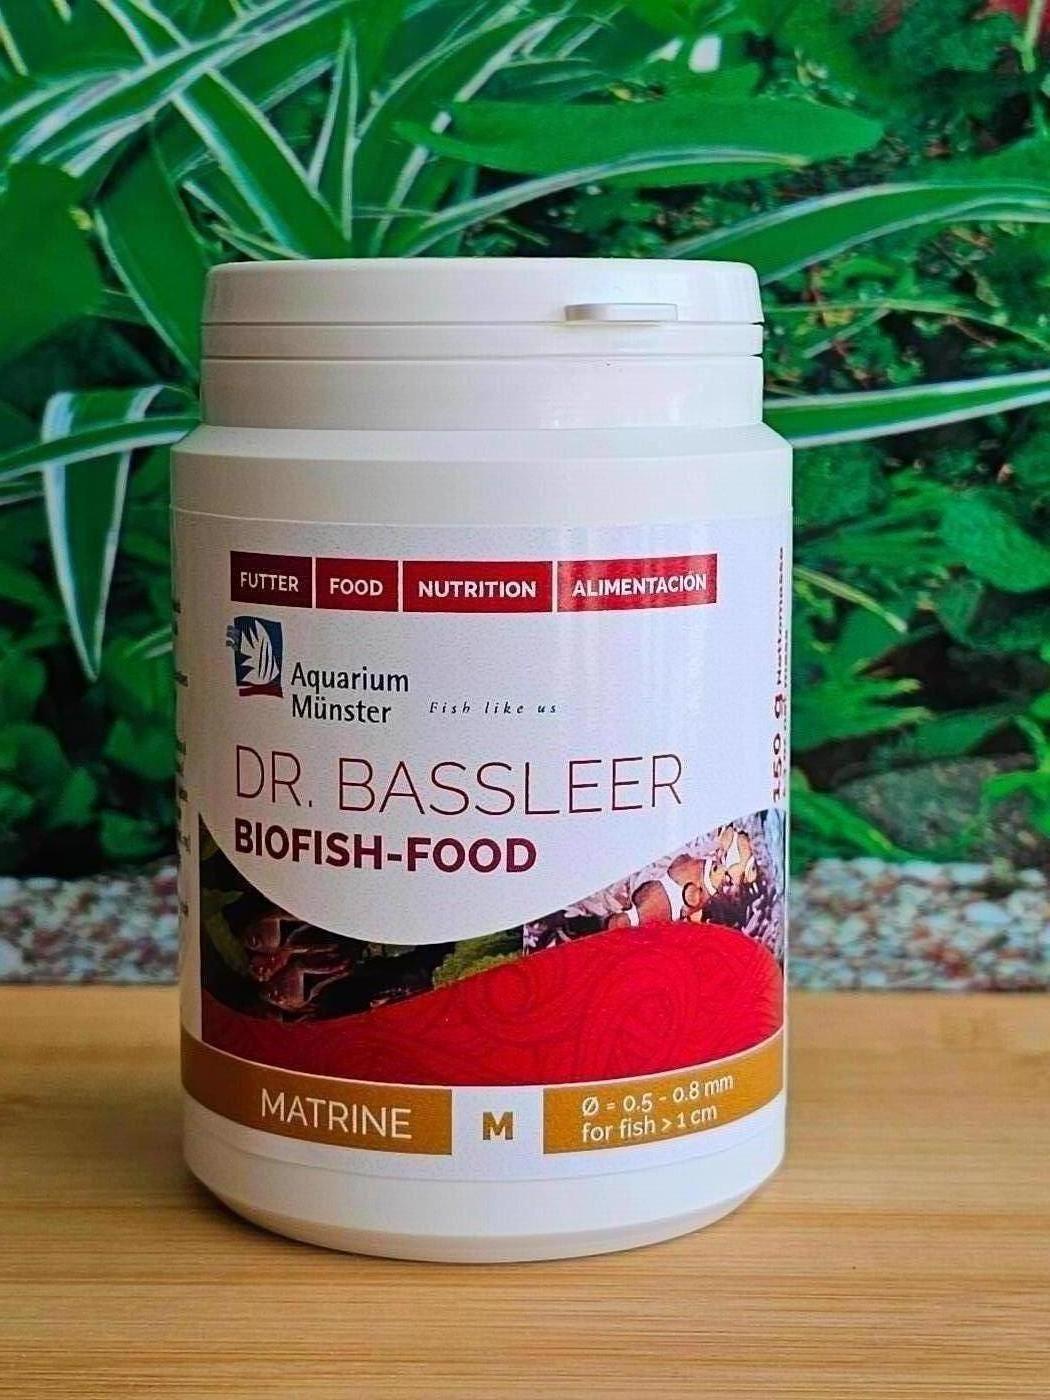 Dr. Bassleer Biofish-Food MATRINE  60g-68g